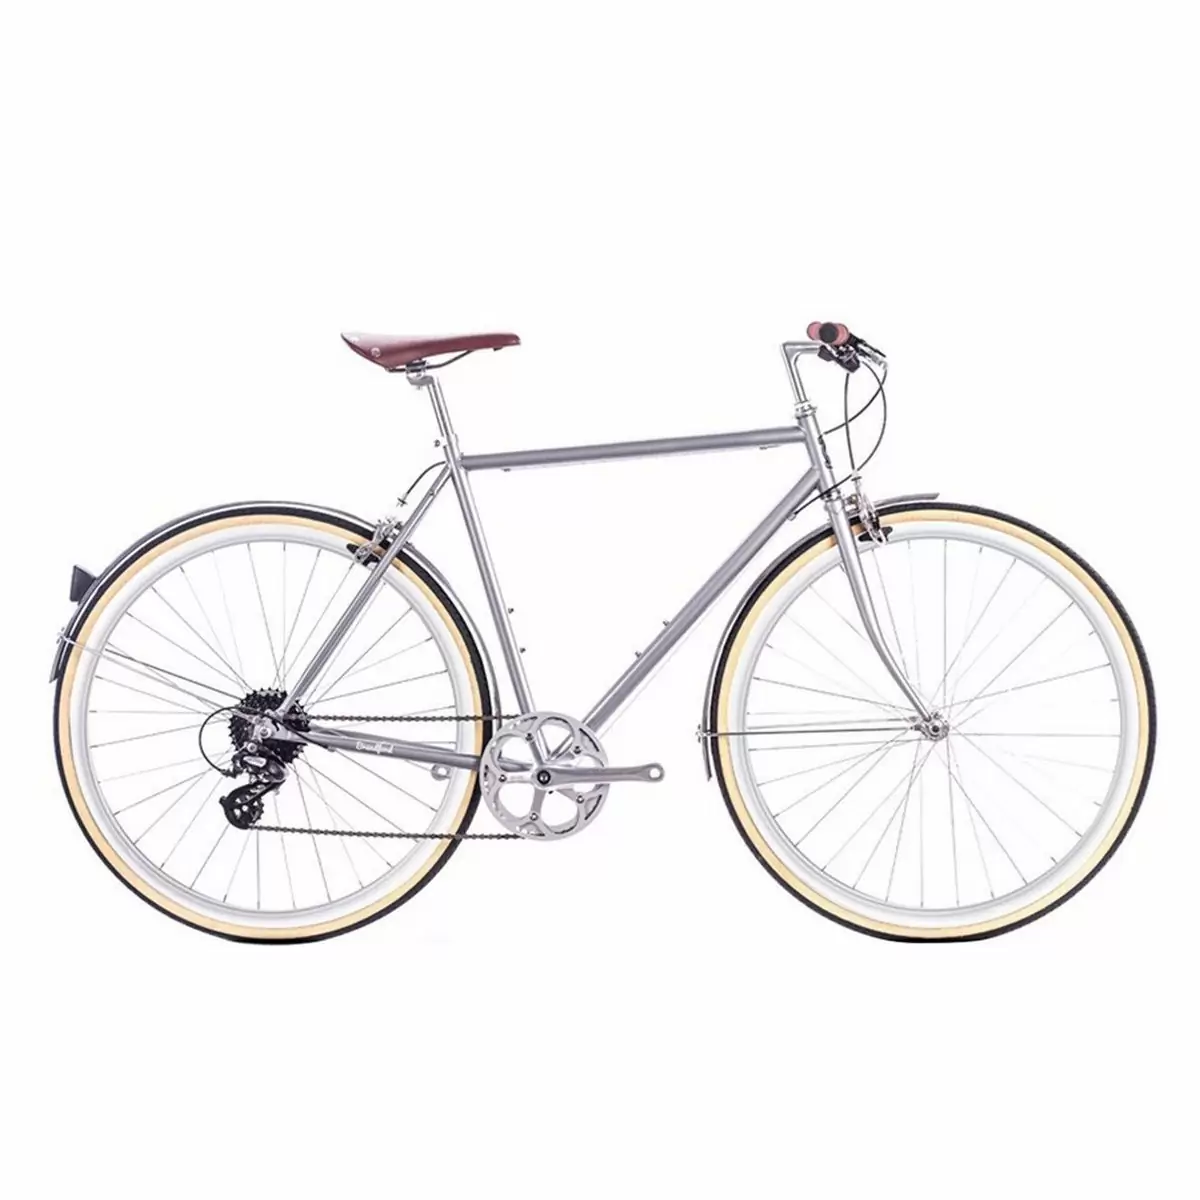 Bicicleta urbana ODYSSEY 8spd Brandford prata grande 58cm - image